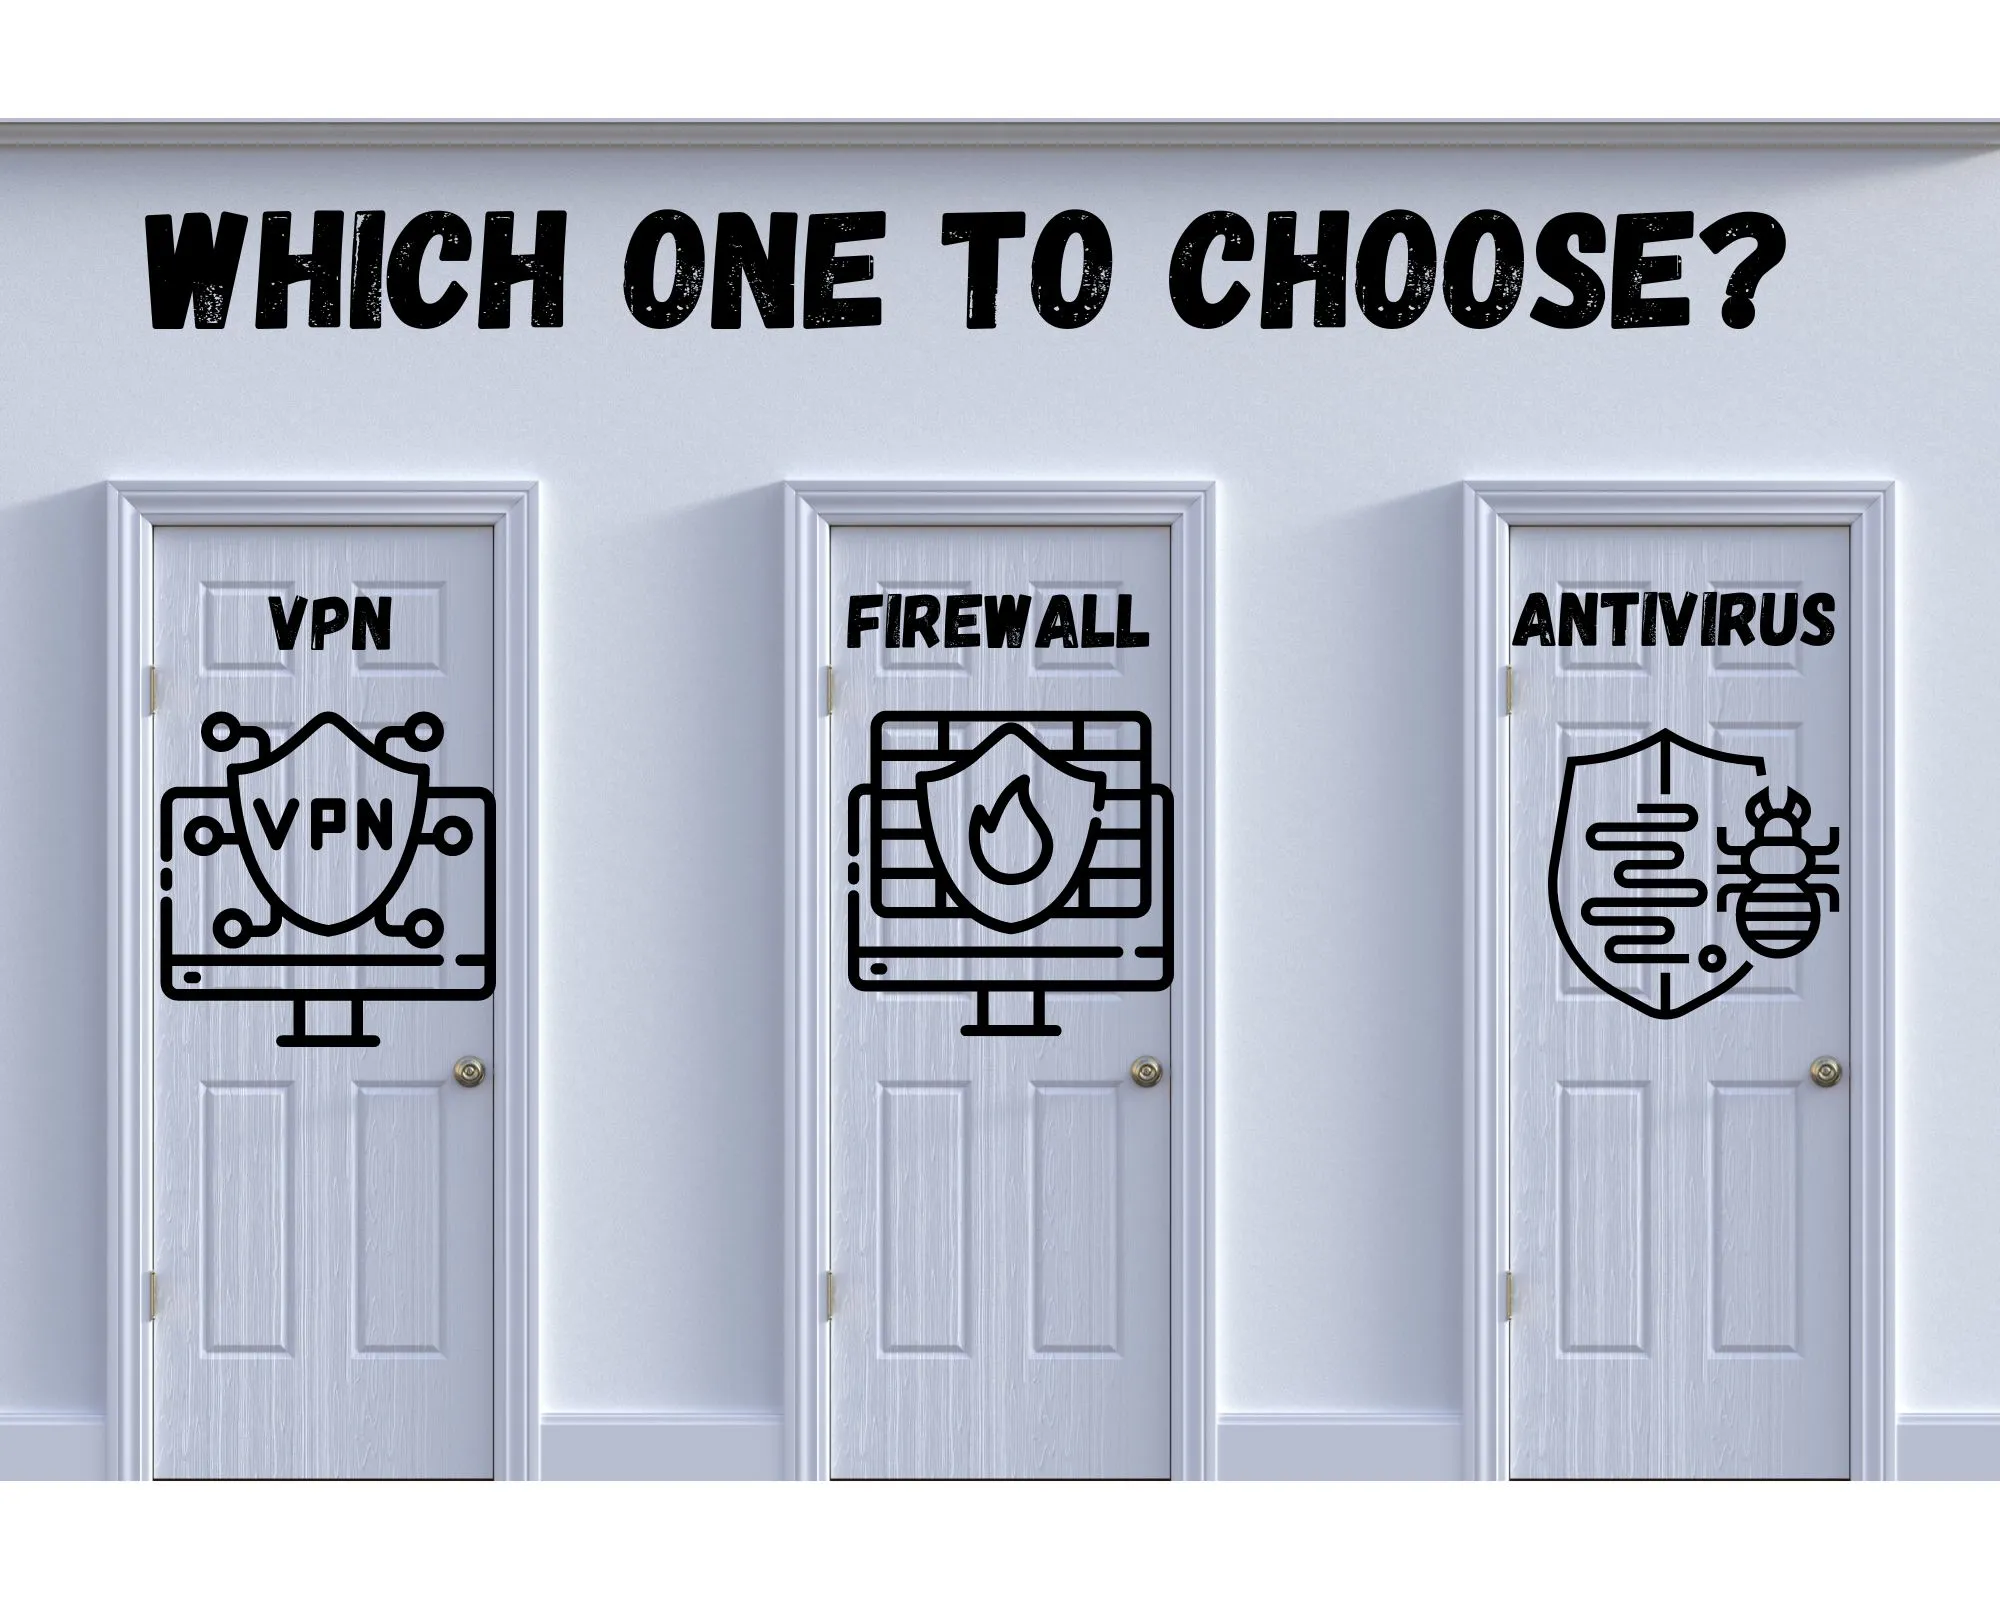 vpn vs firewall vs antivirus - Which one to choose?